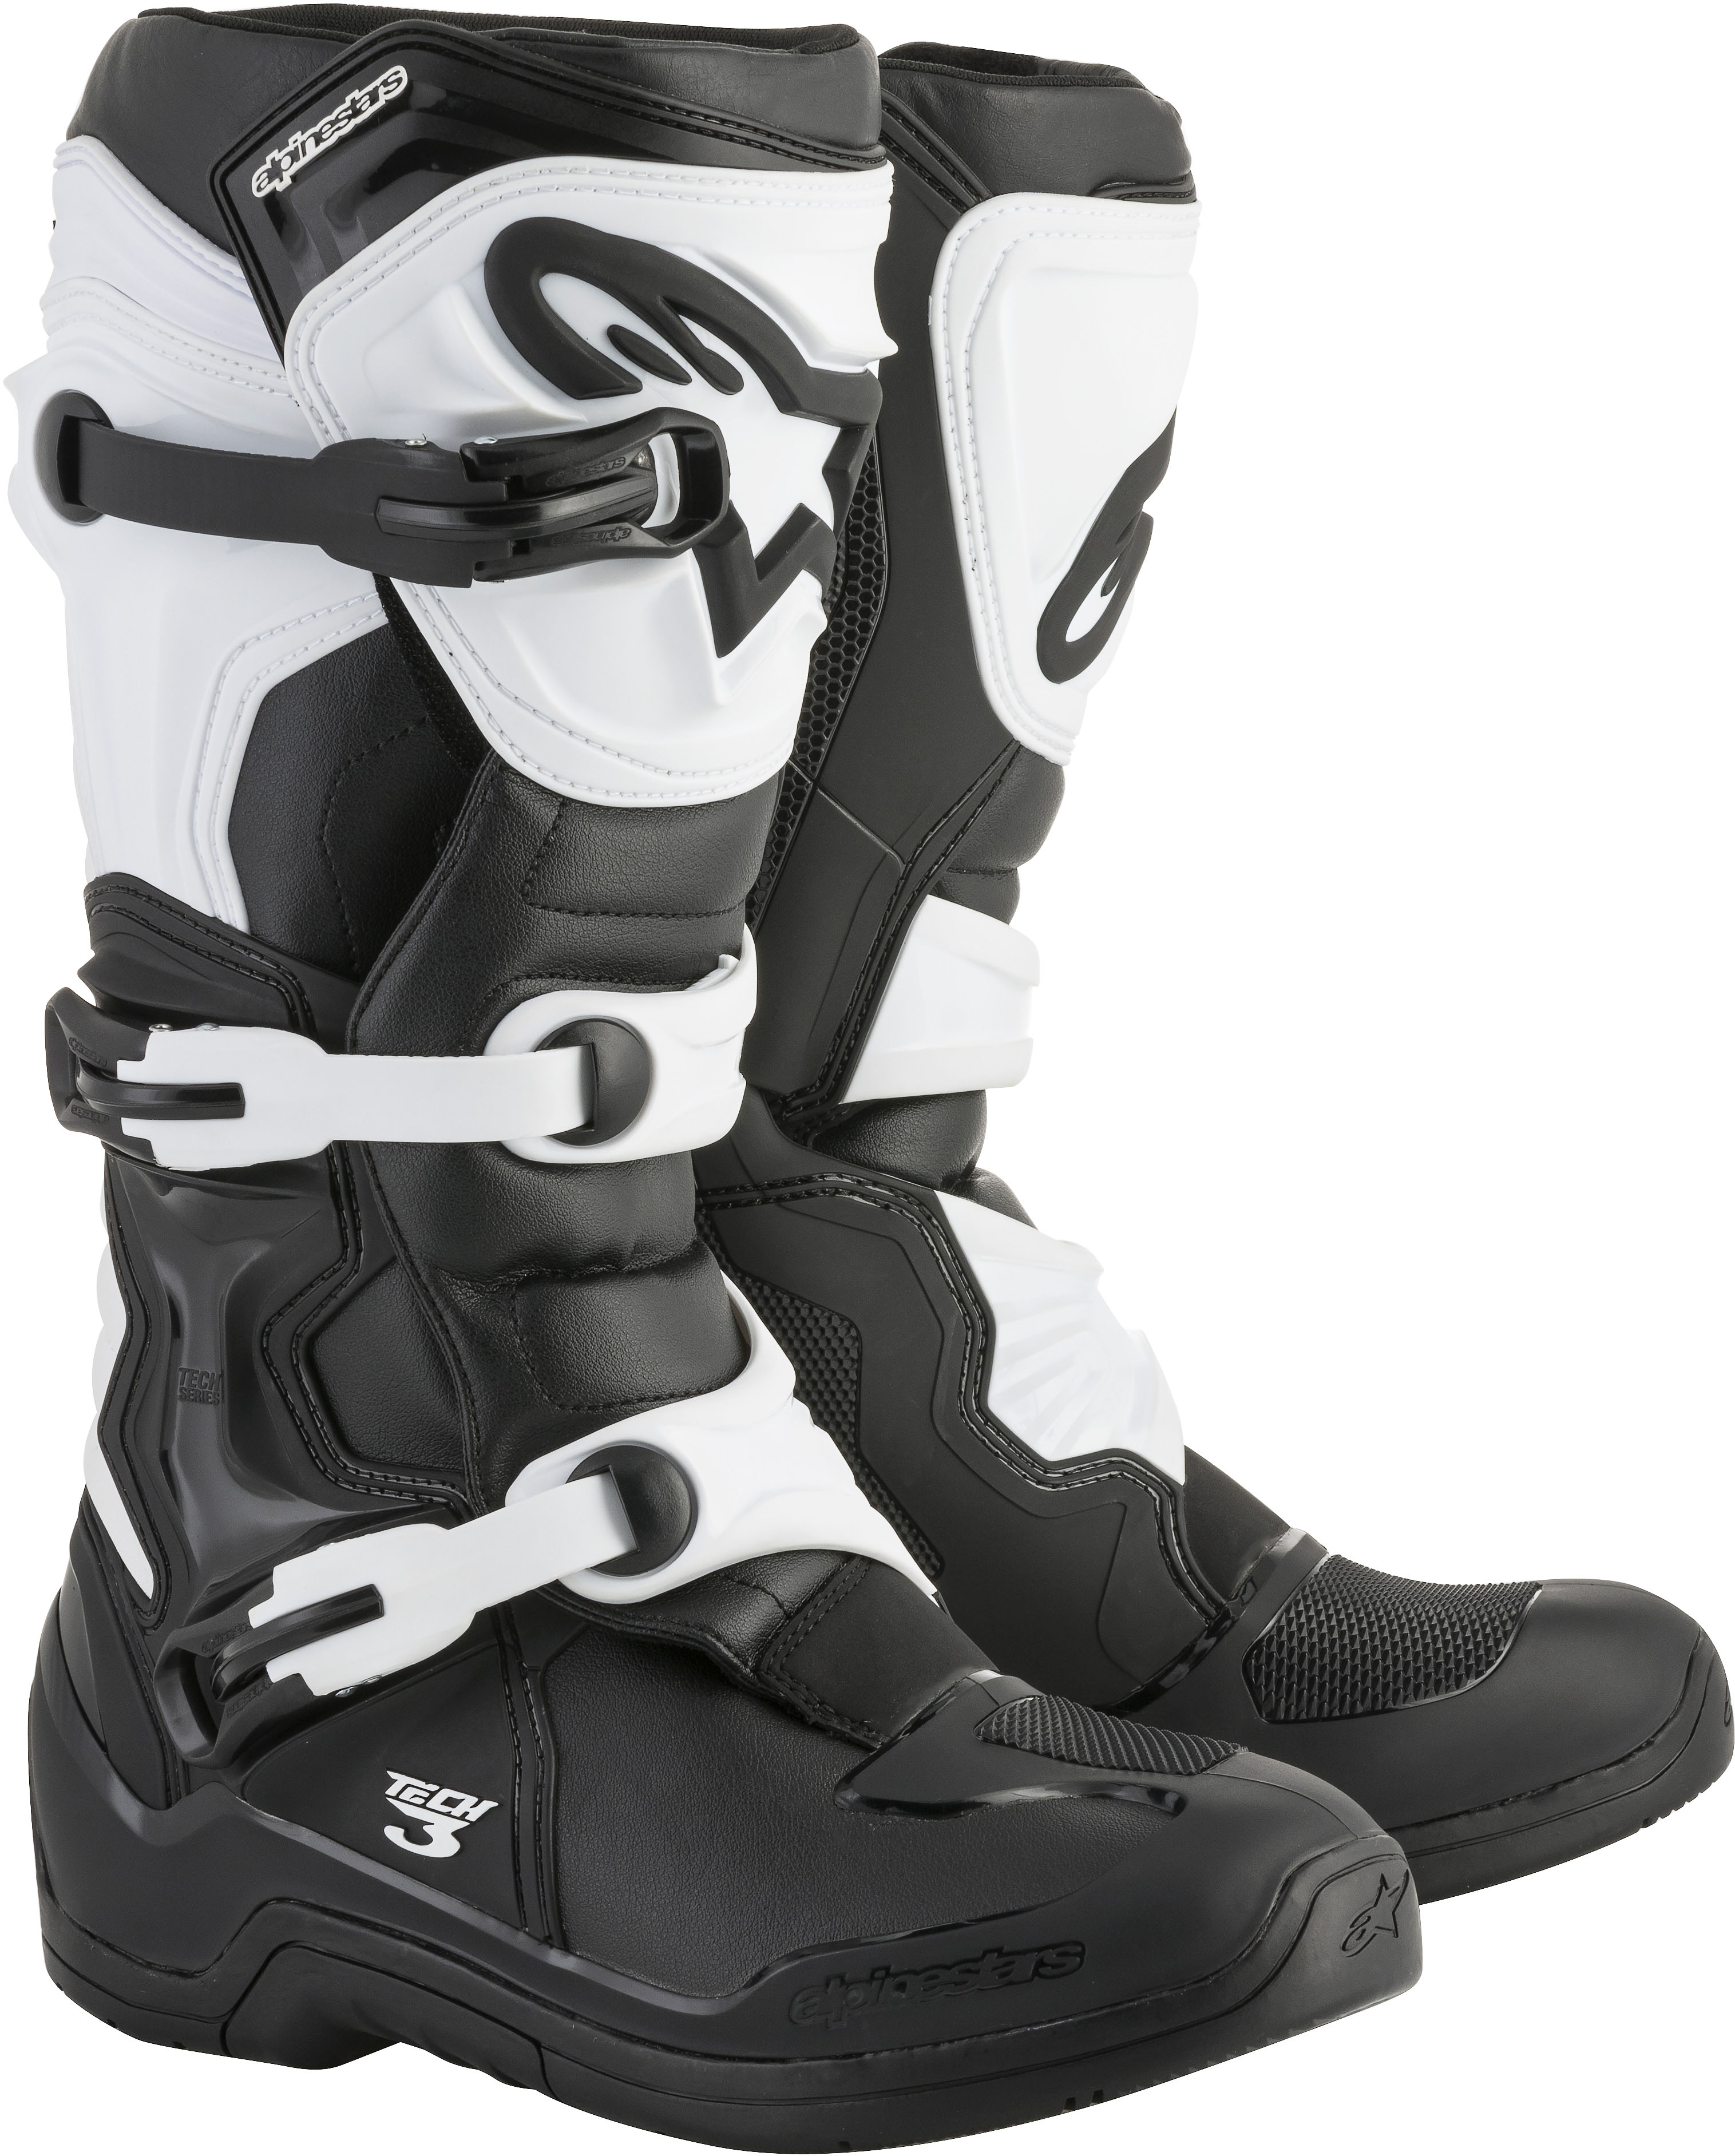 Tech 3 Boots Black/White Size 13 - Click Image to Close